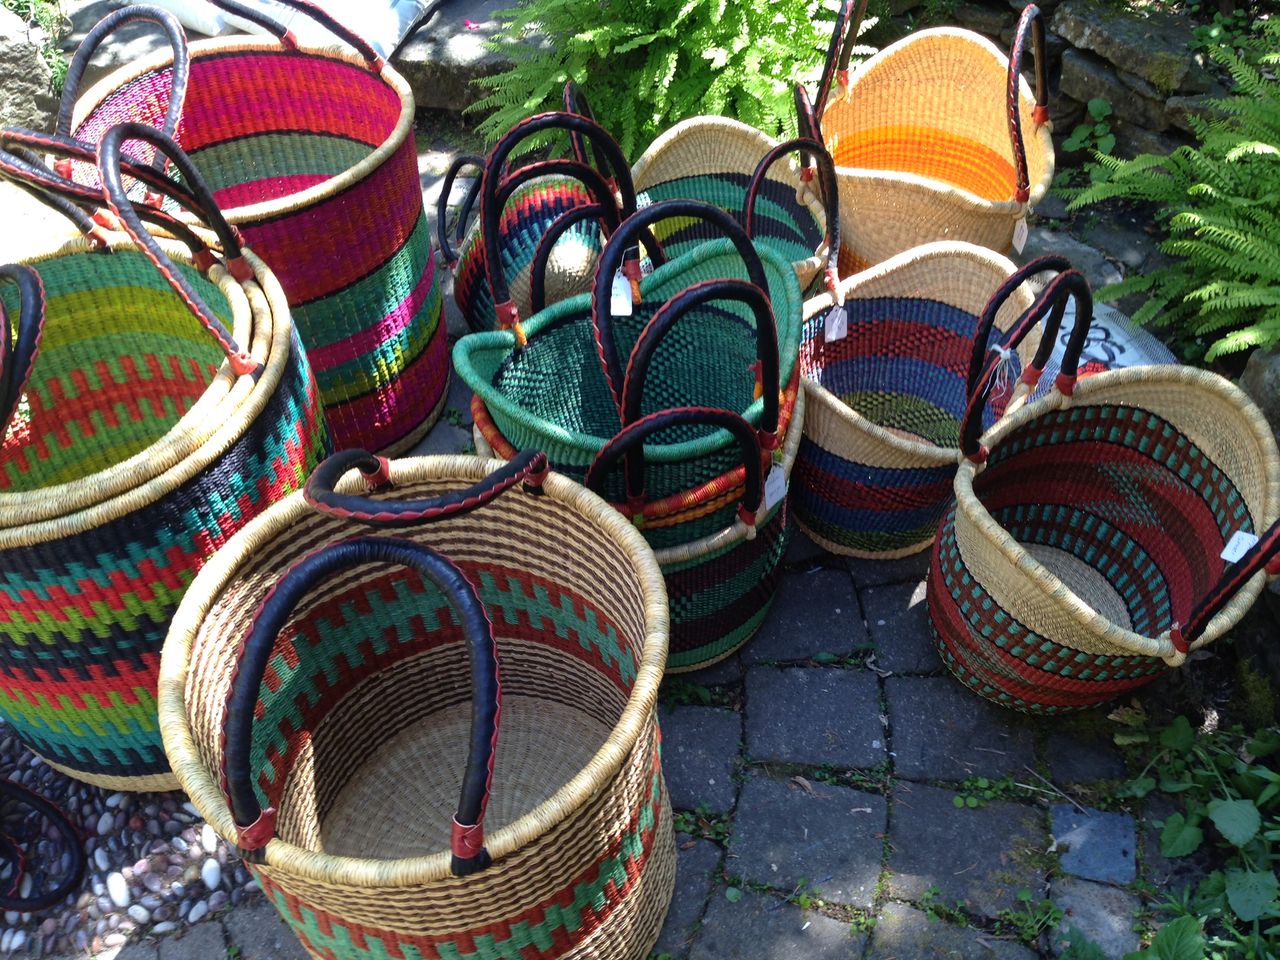 Baba Tree Laundry and Nyariga Shopping Baskets